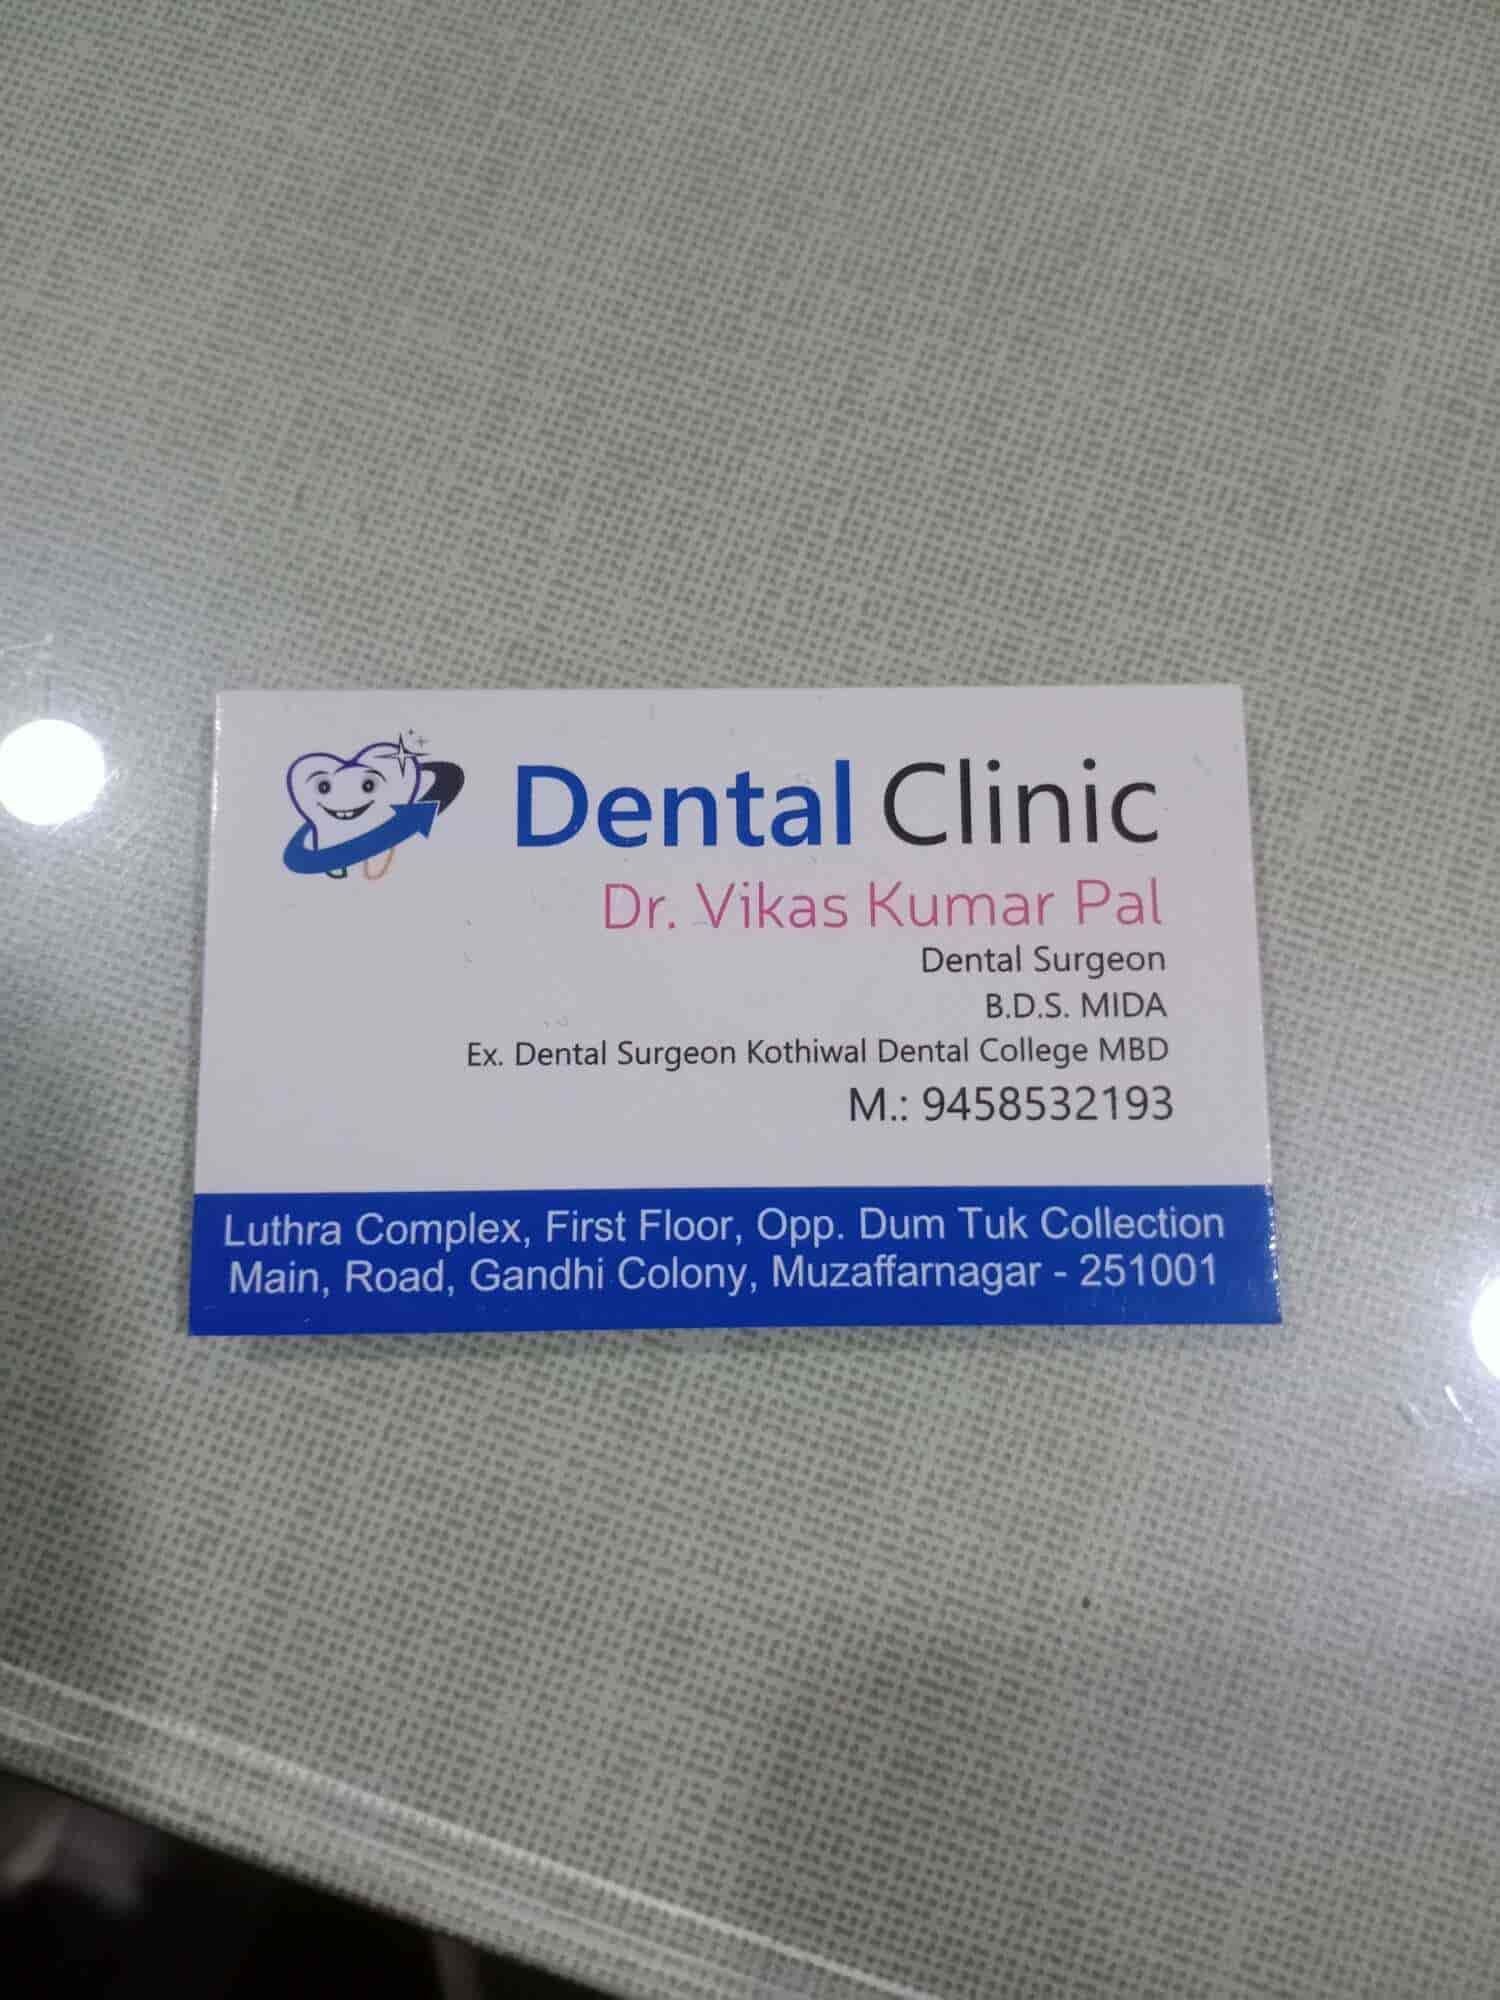 Denatl Clinic